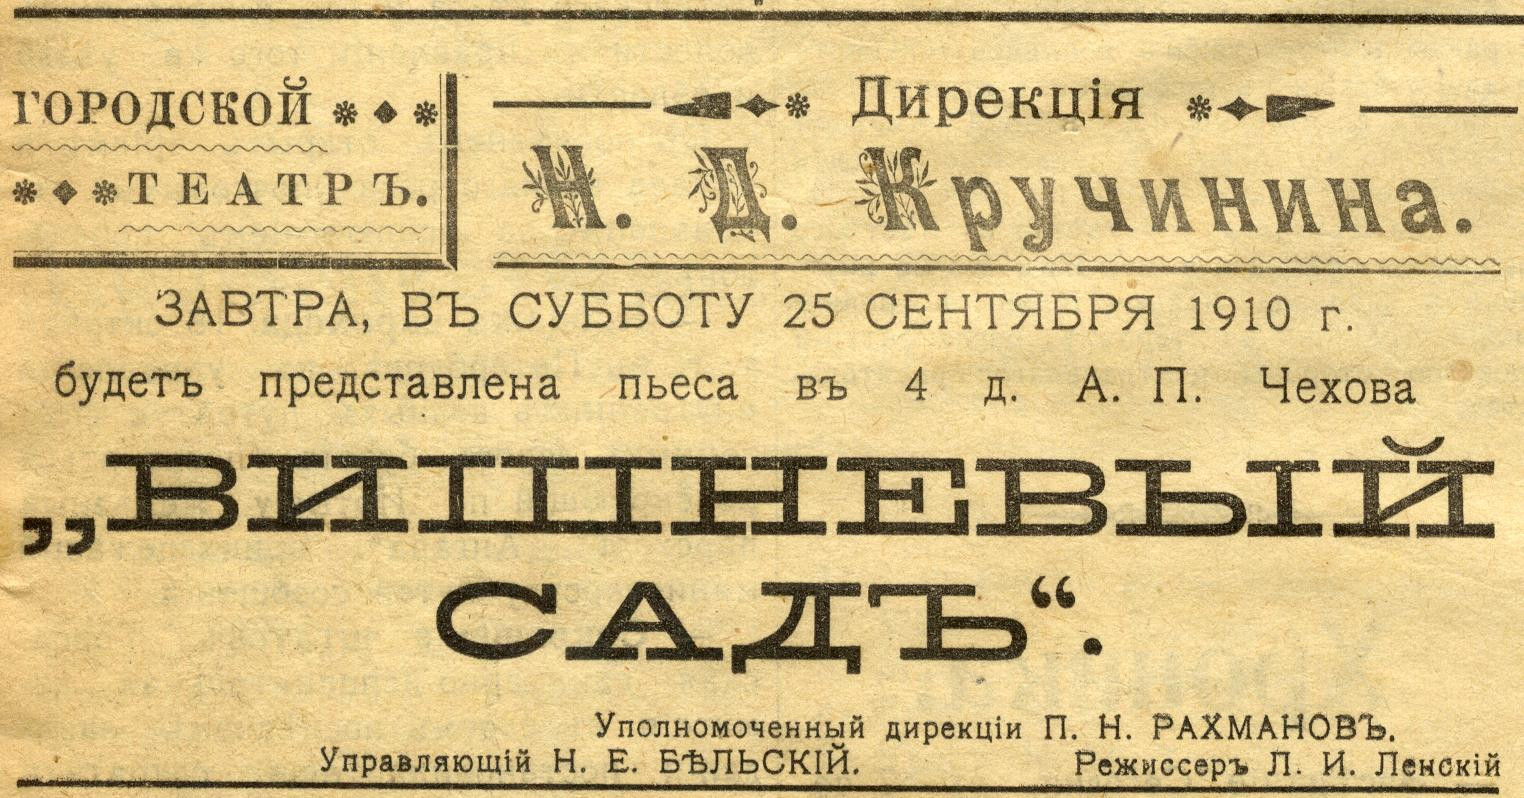 Афиша театра в&nbsp;газете «Омский телеграф», 1910&nbsp;г.